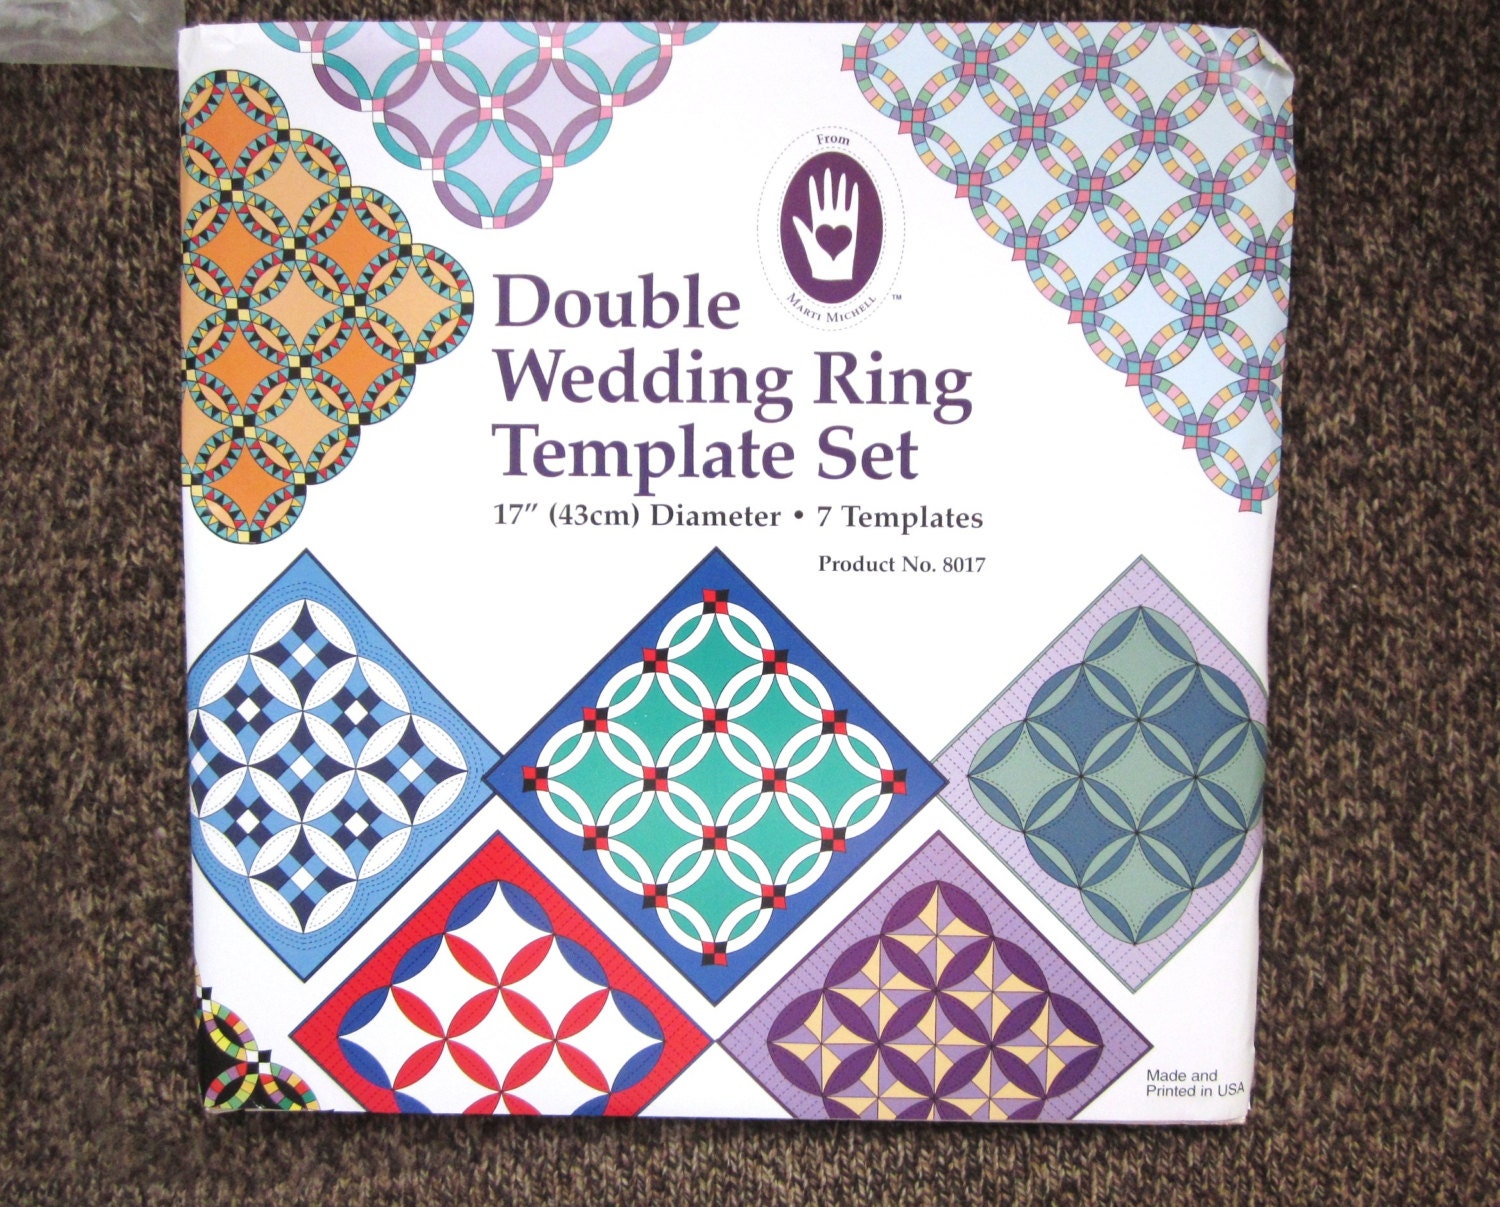 NIB Double Wedding Ring Template Set 17 diameter